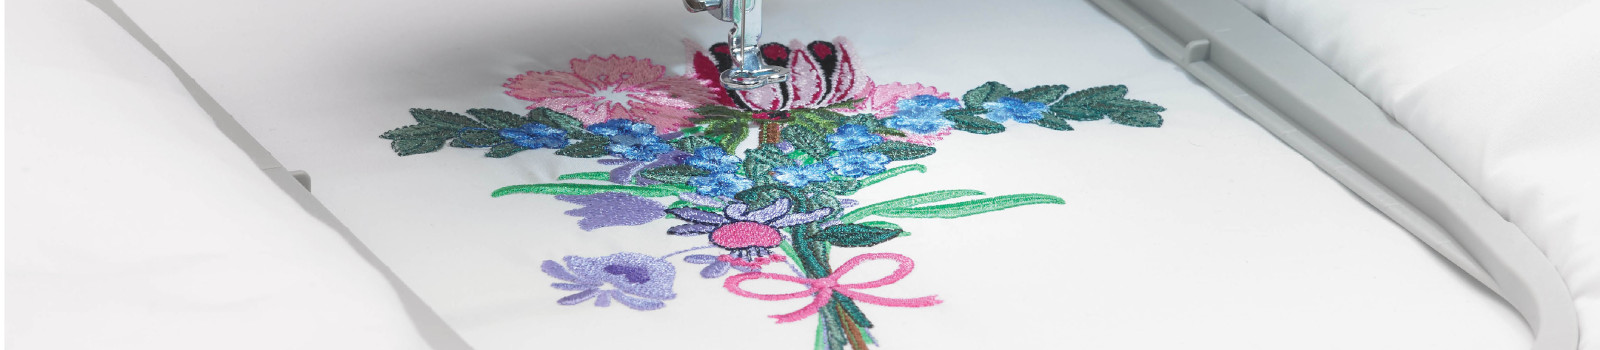 Machine Embroidery Designs